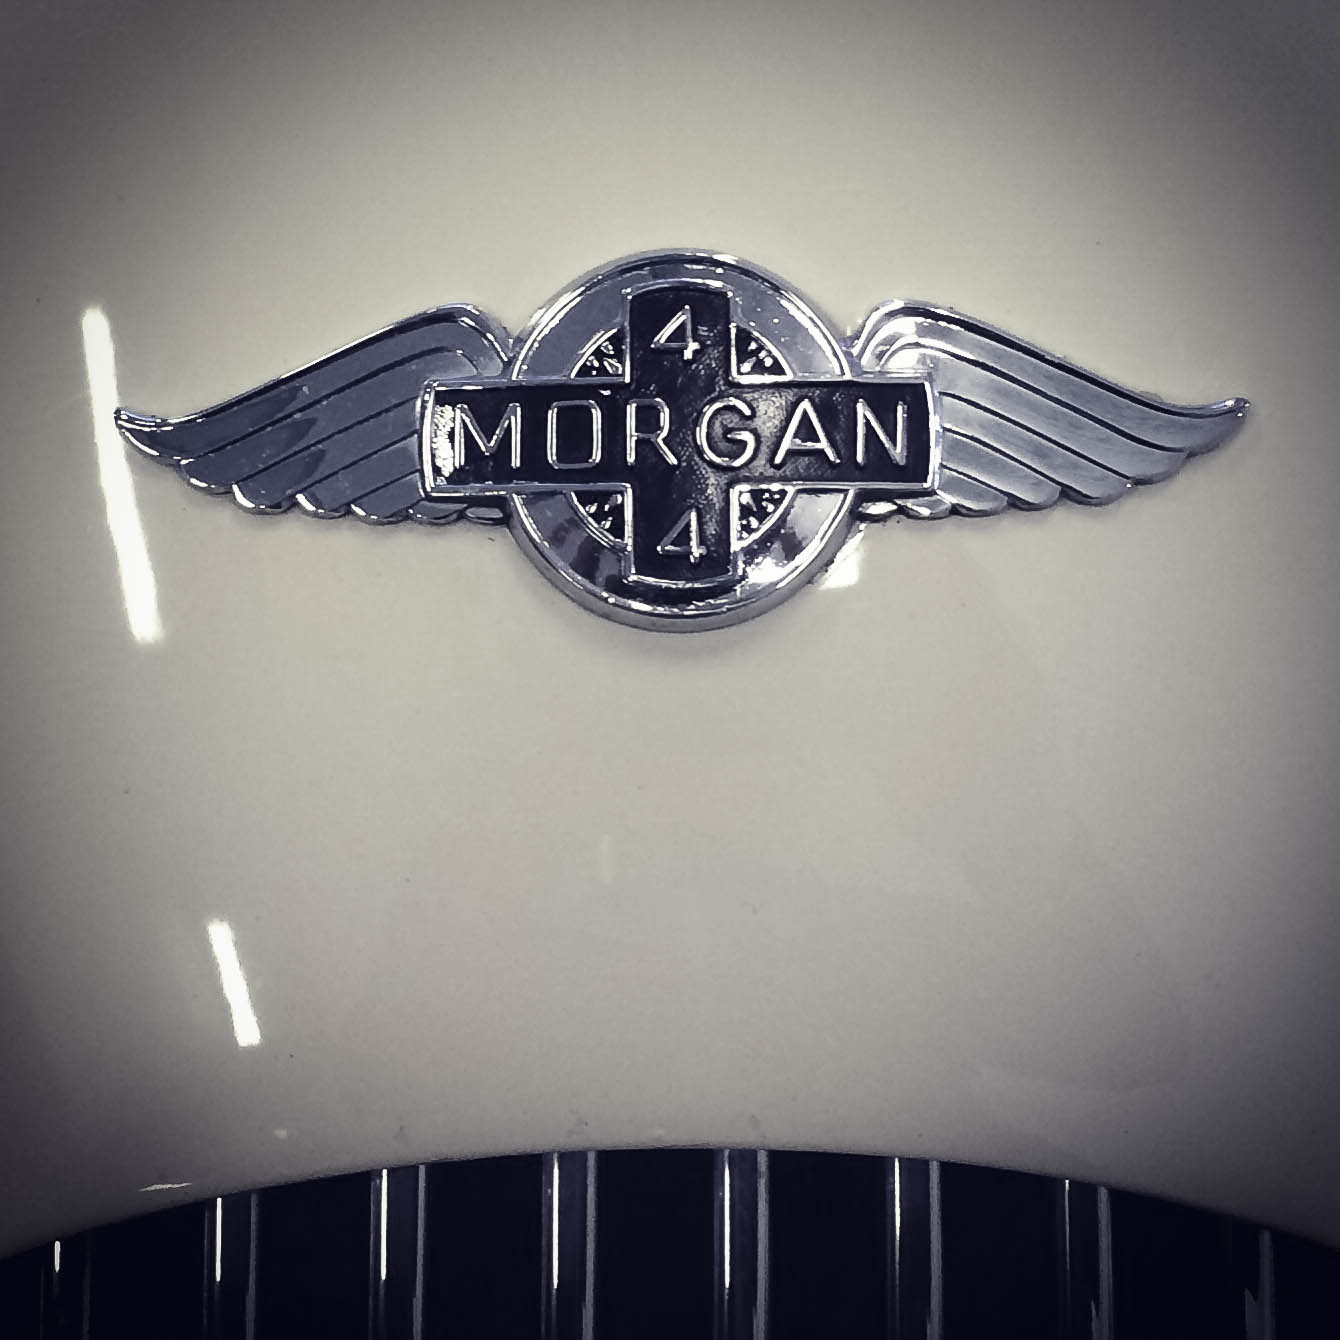 Morgan – Winged badge